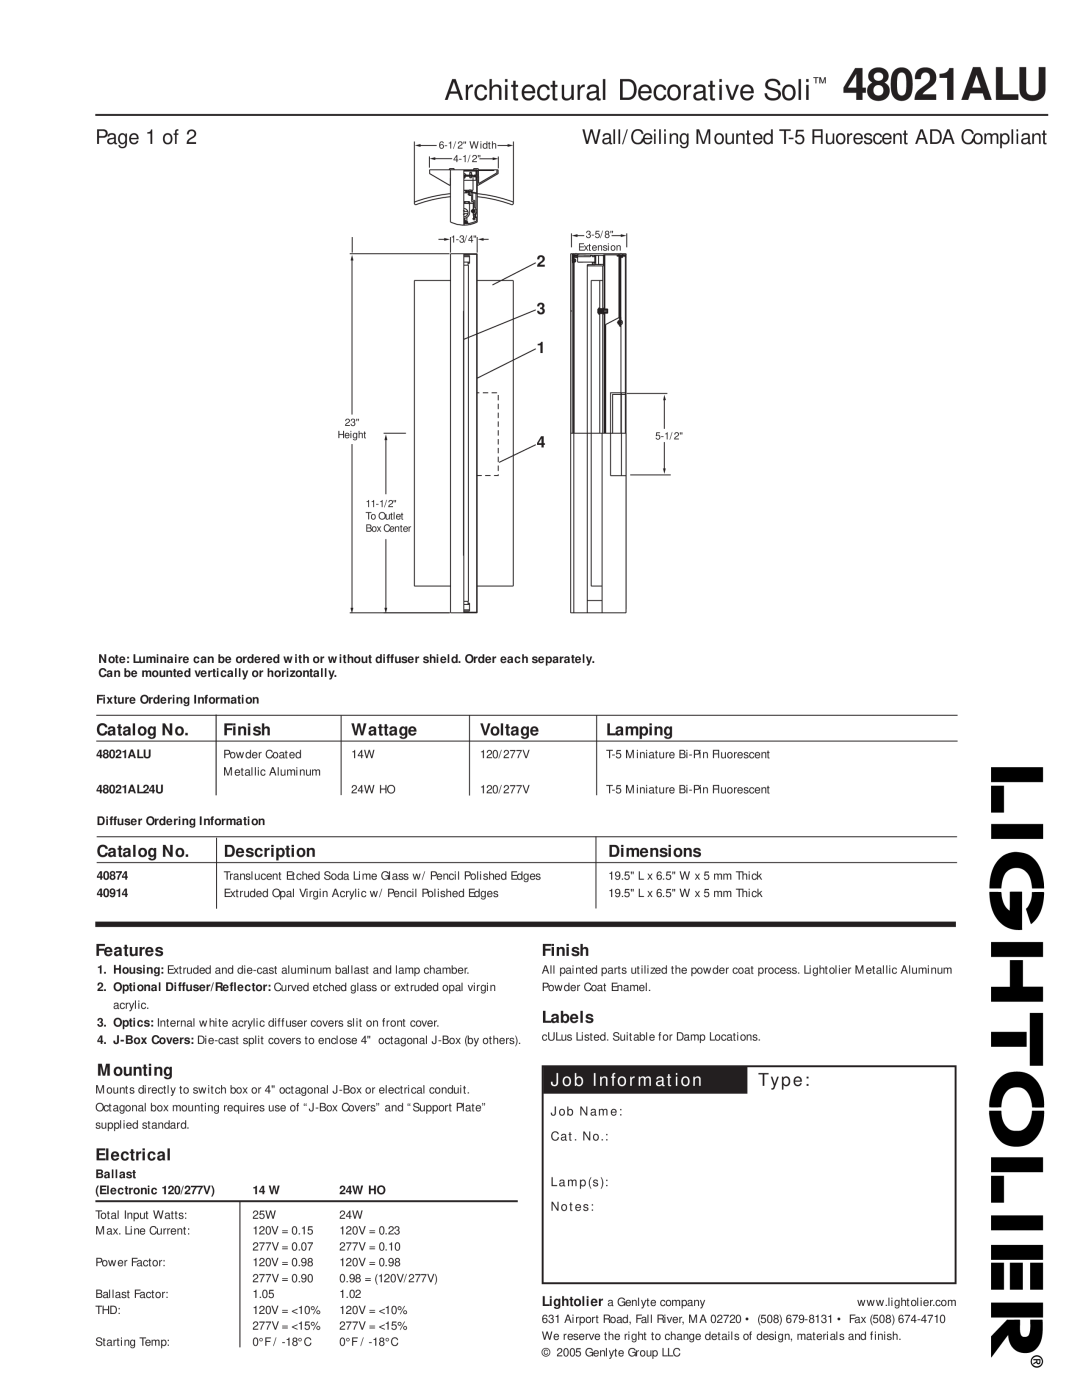 Lightolier dimensions Page 1 of, Architectural Decorative Soli 48021ALU 